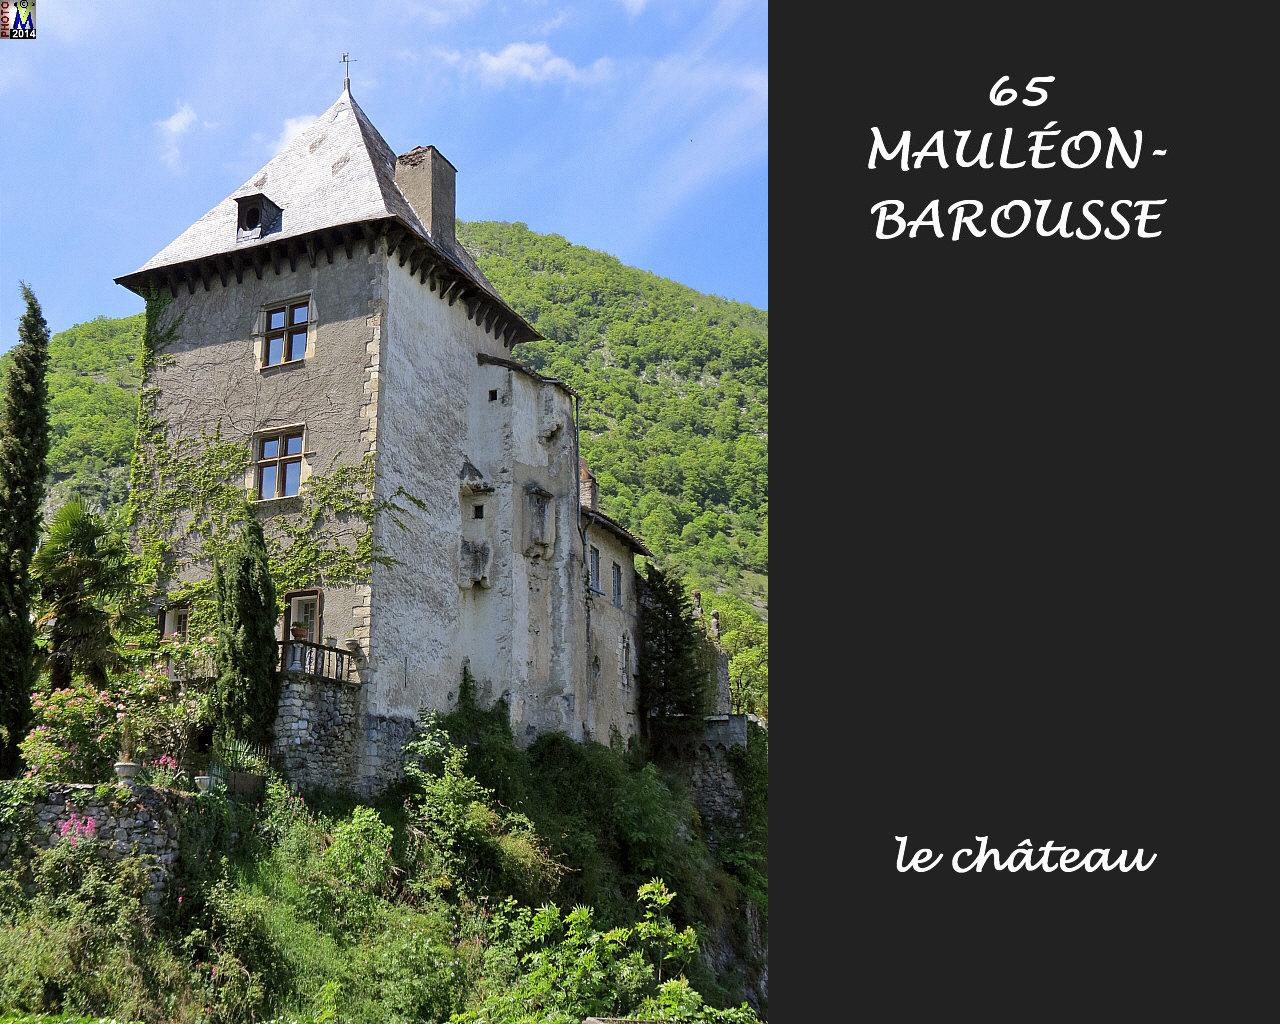 65MAULEON-BAROUSSE_chateau_104.jpg